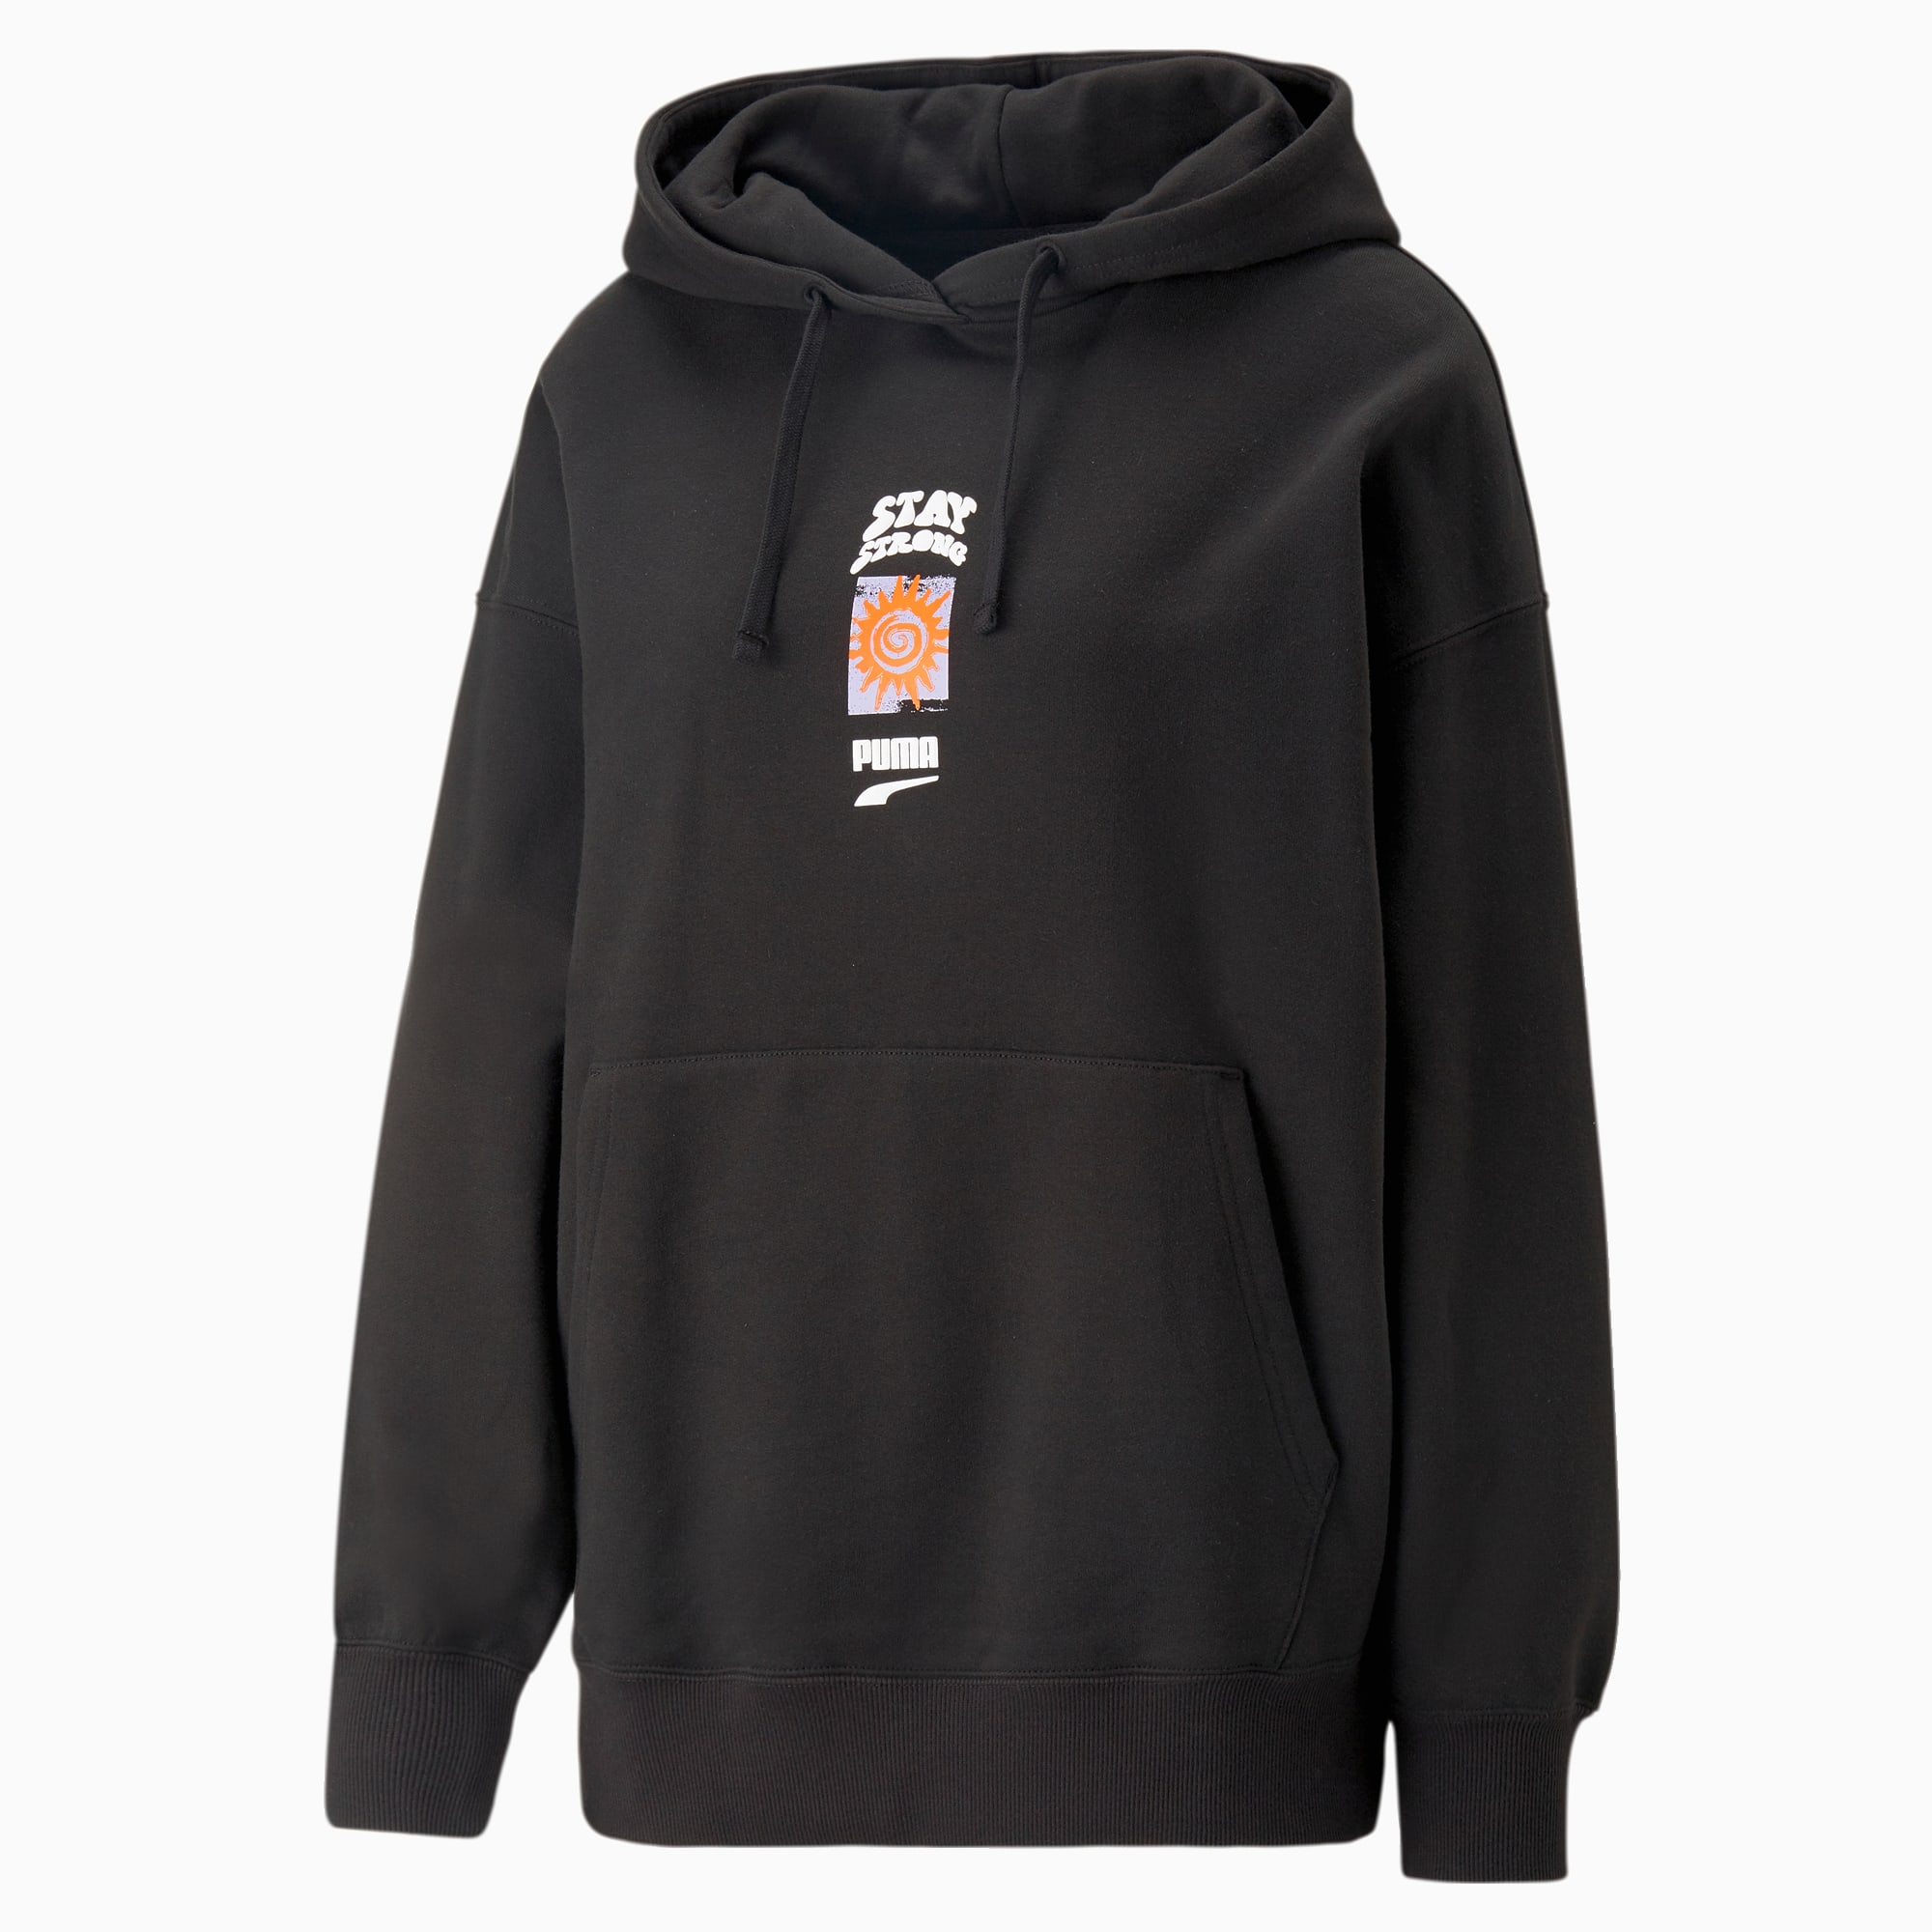 graphic hoodie grey